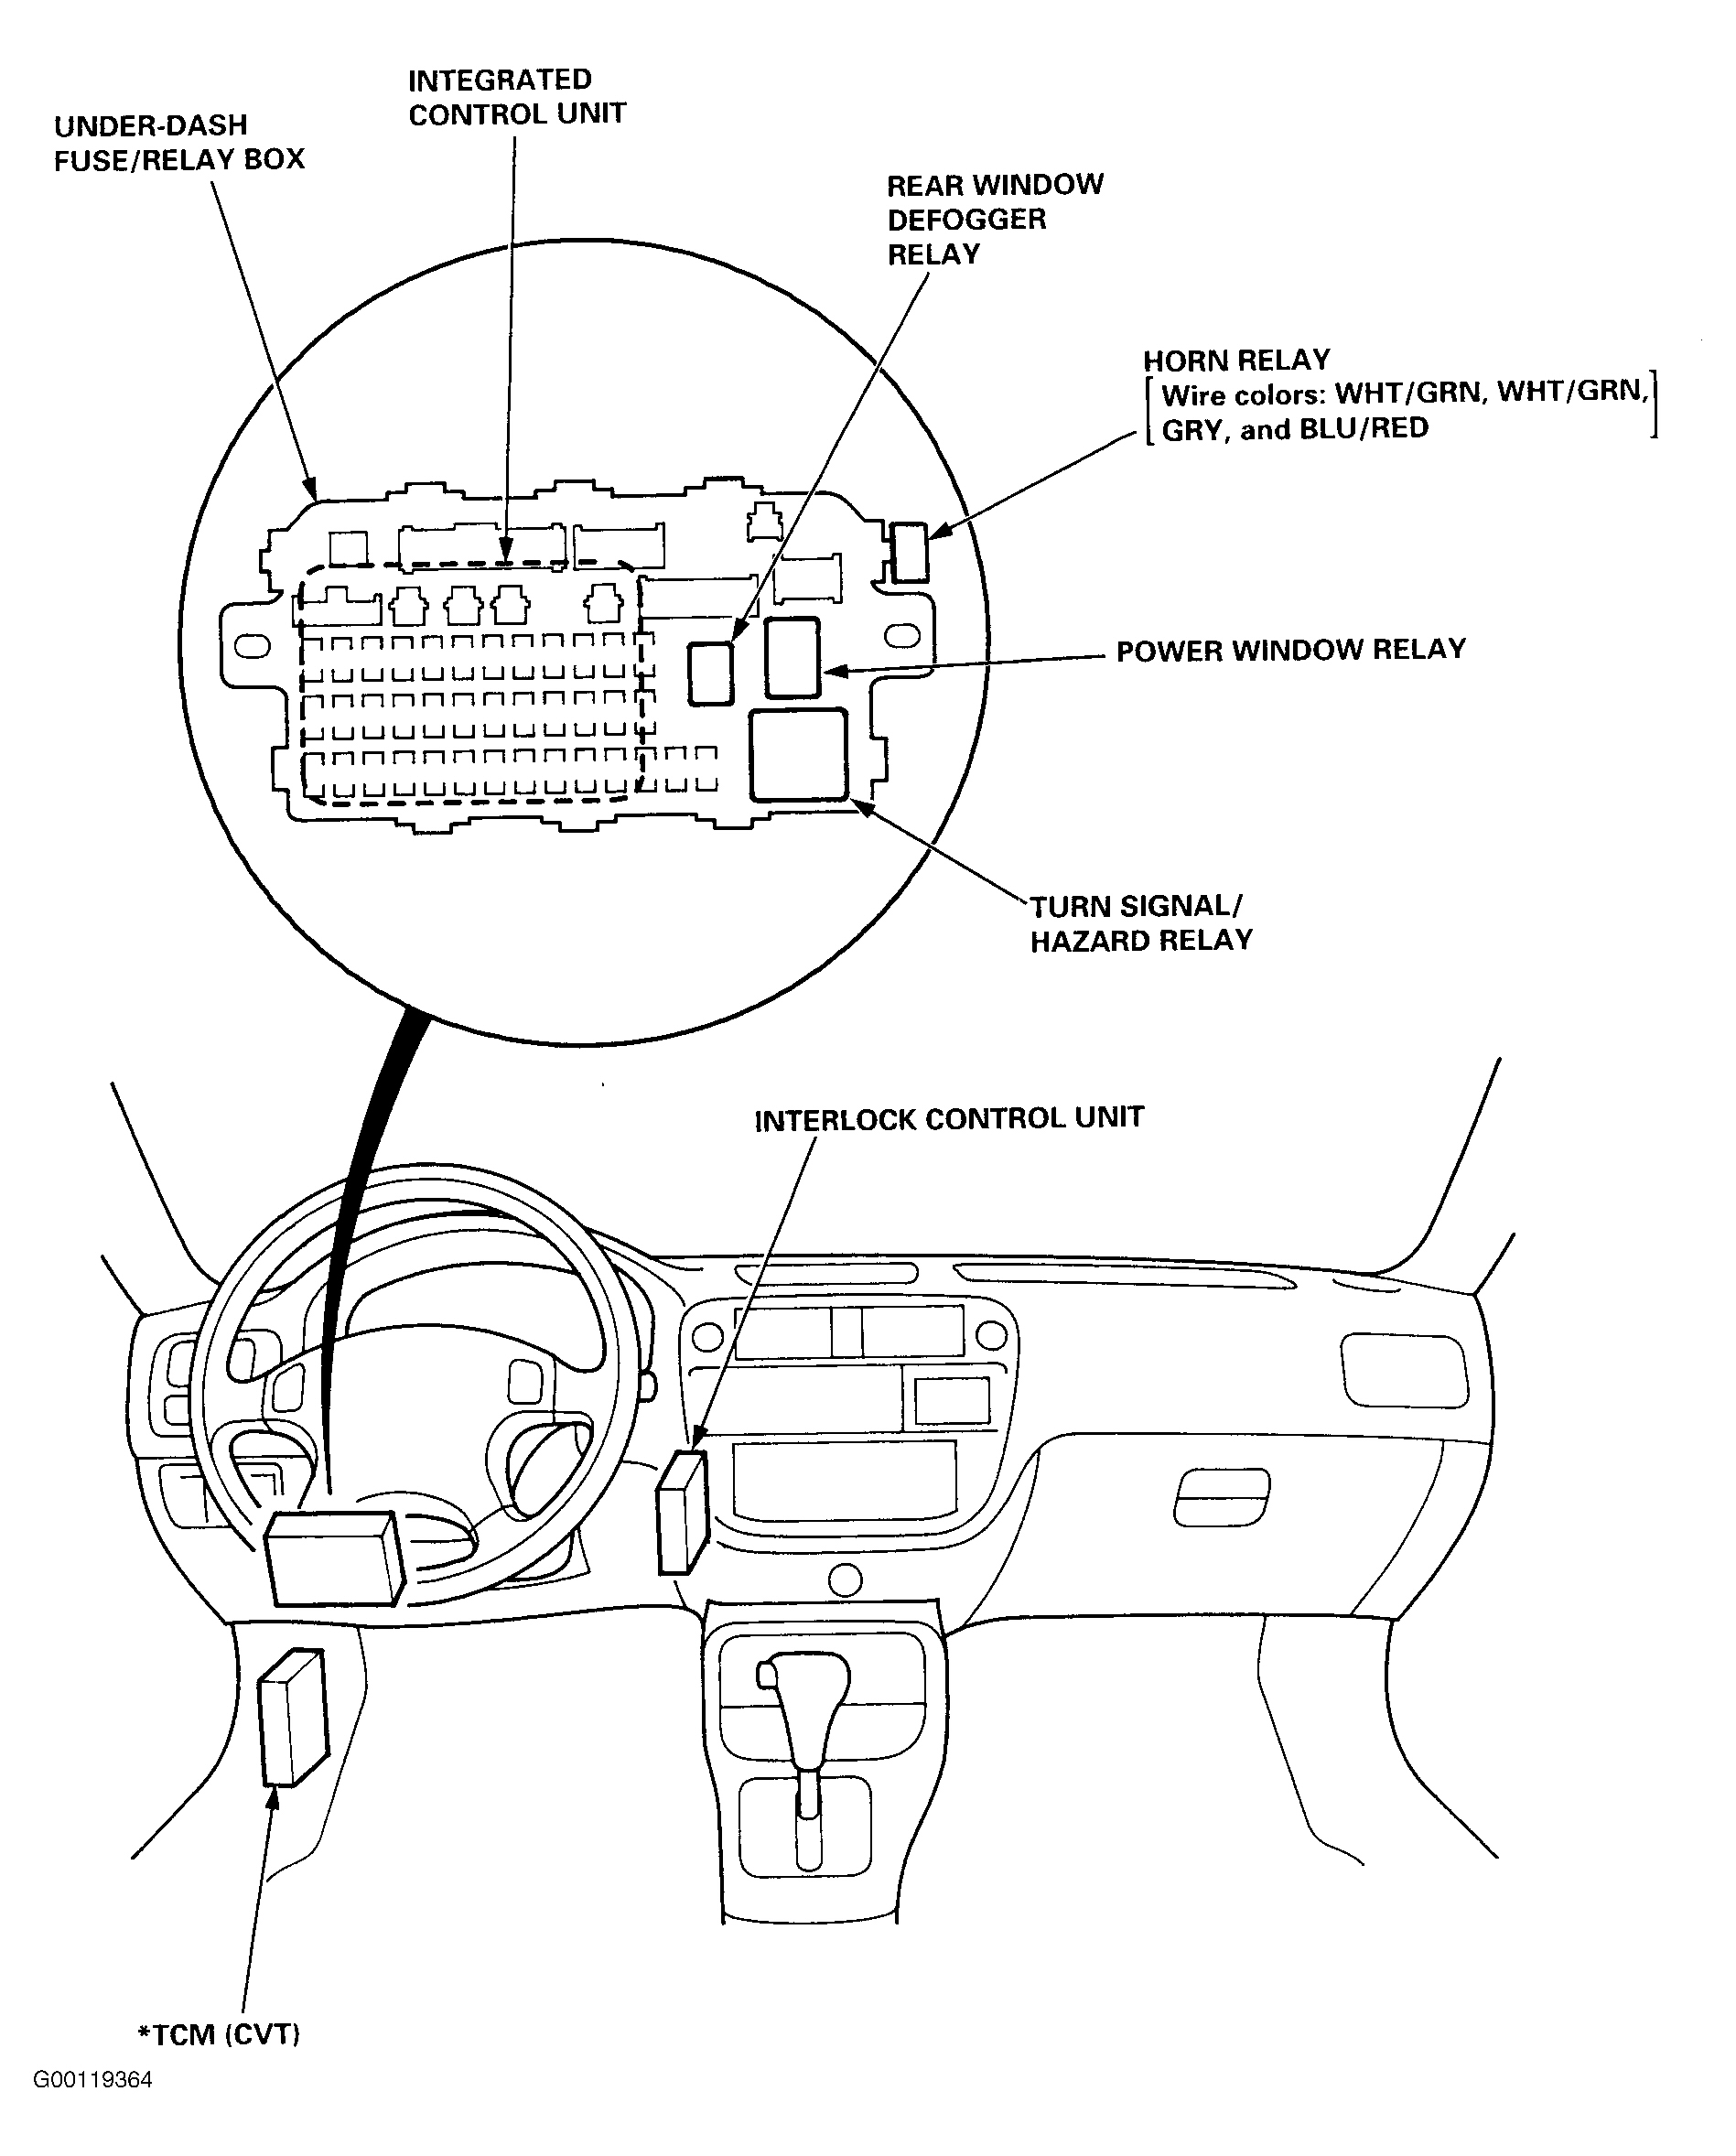 Honda Civic HX 1999 - Component Locations -  Locating Under-Dash Fuse/Relay Box (1996-97)